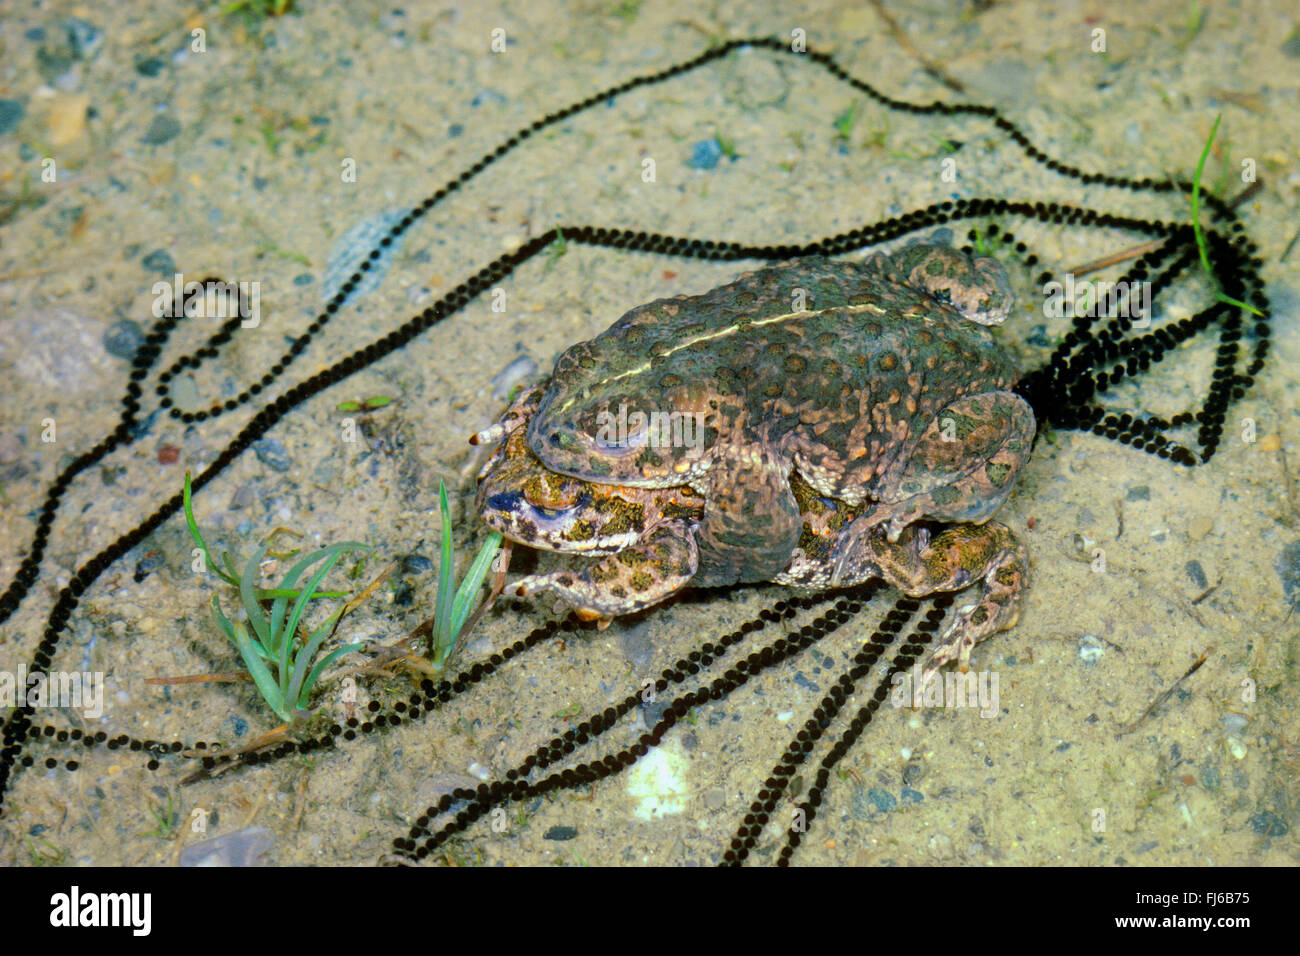 natterjack toad, natterjack, British toad (Bufo calamita), mating, strings of spawn, Germany Stock Photo